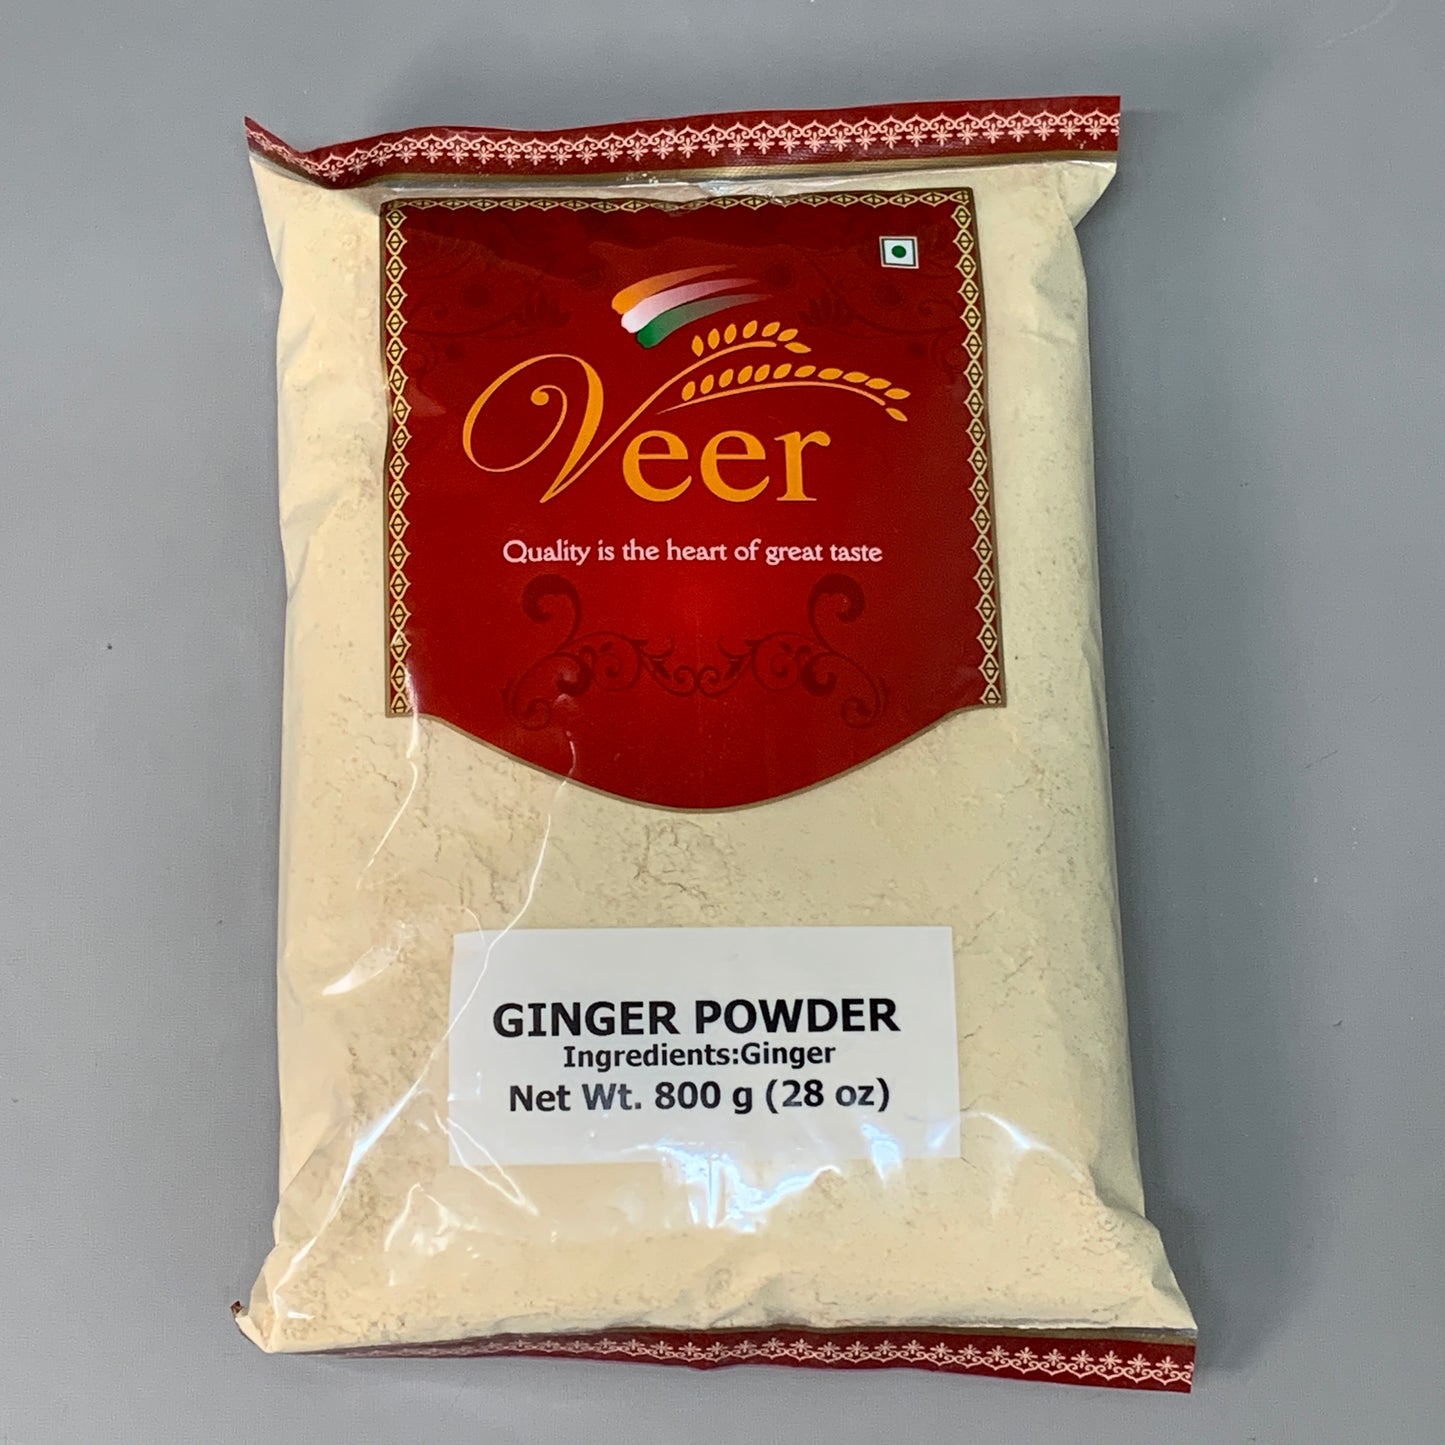 NEW INDIA BAZAR Veer 16 PK of Ginger Powder 28 oz (07/24)